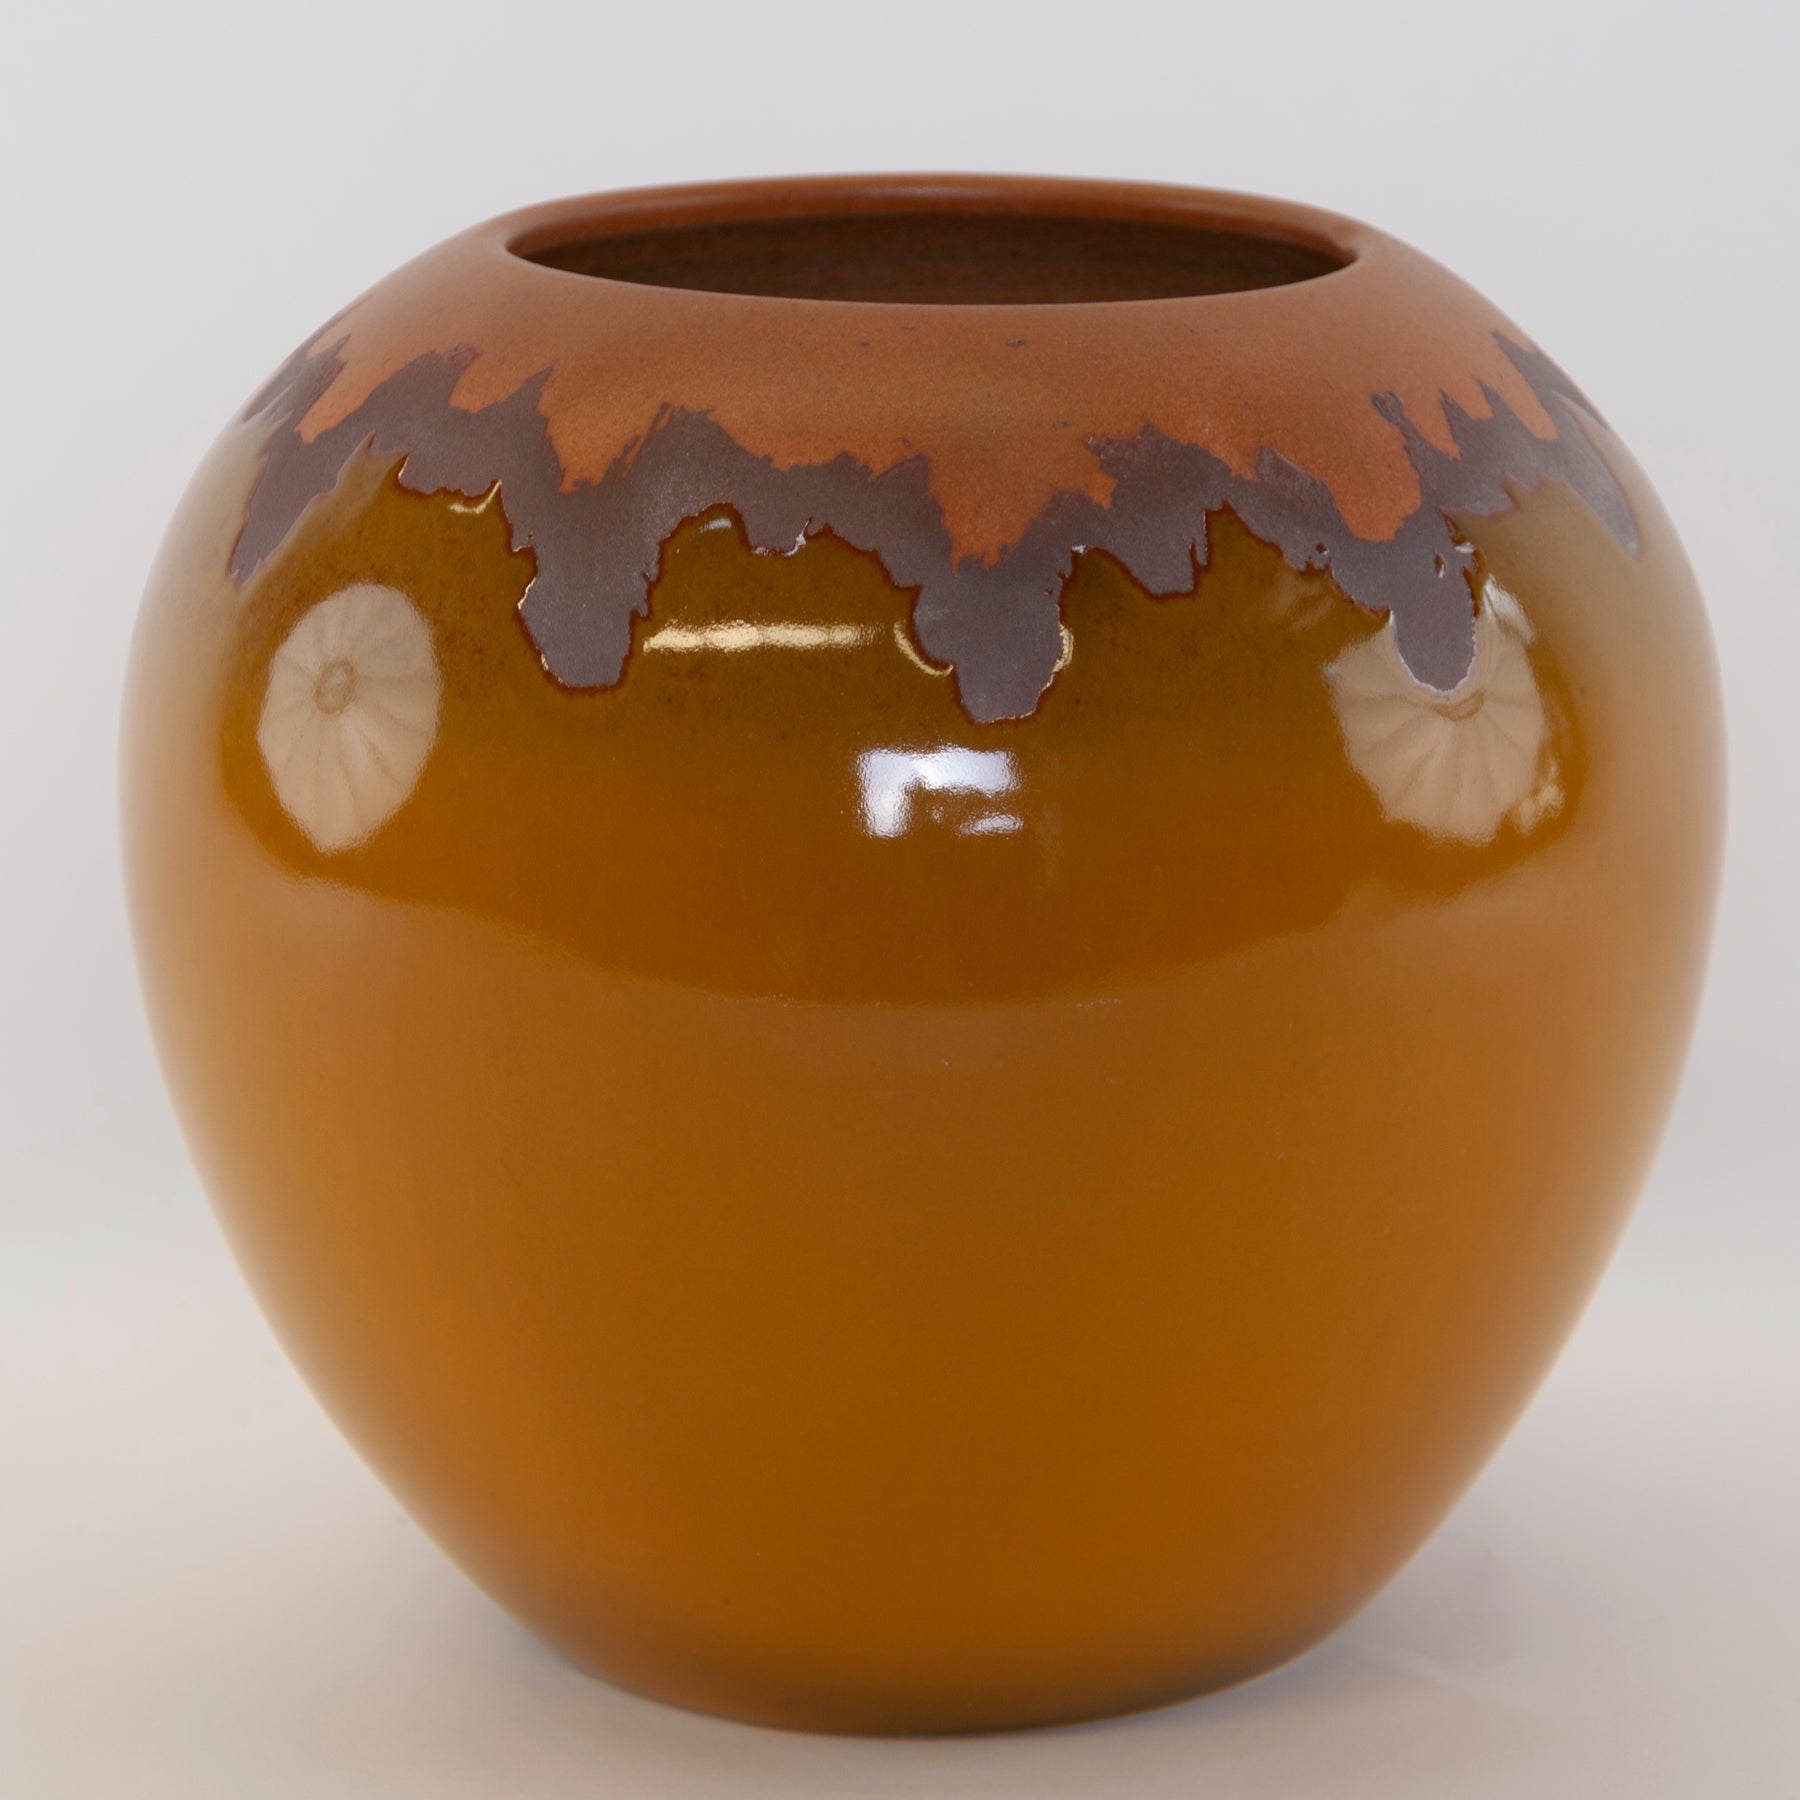 Elements Series Ceramic Vases and Pots - BUBULAND HOME